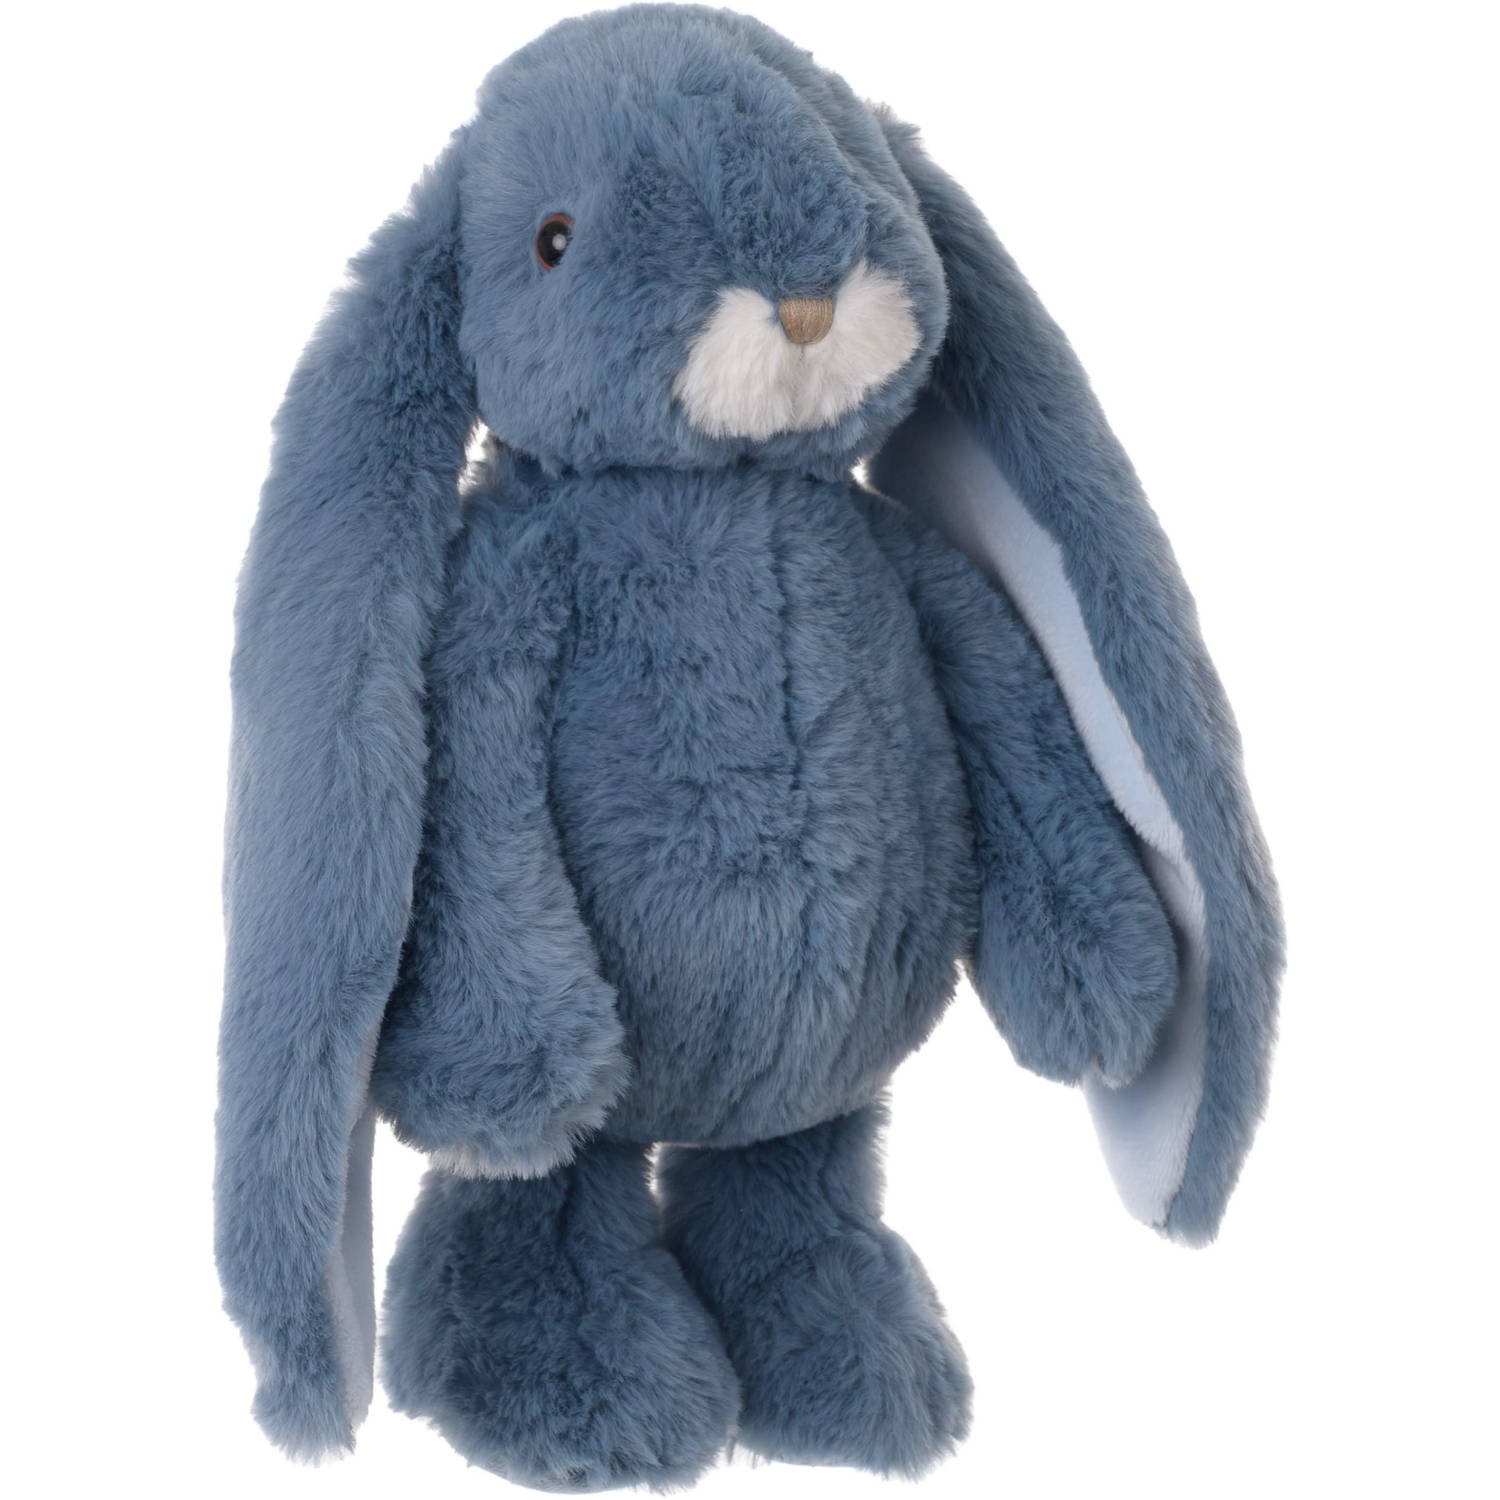 Bukowski pluche konijn knuffeldier - blauw - staand - 40 cm - Luxe kwaliteit knuffels